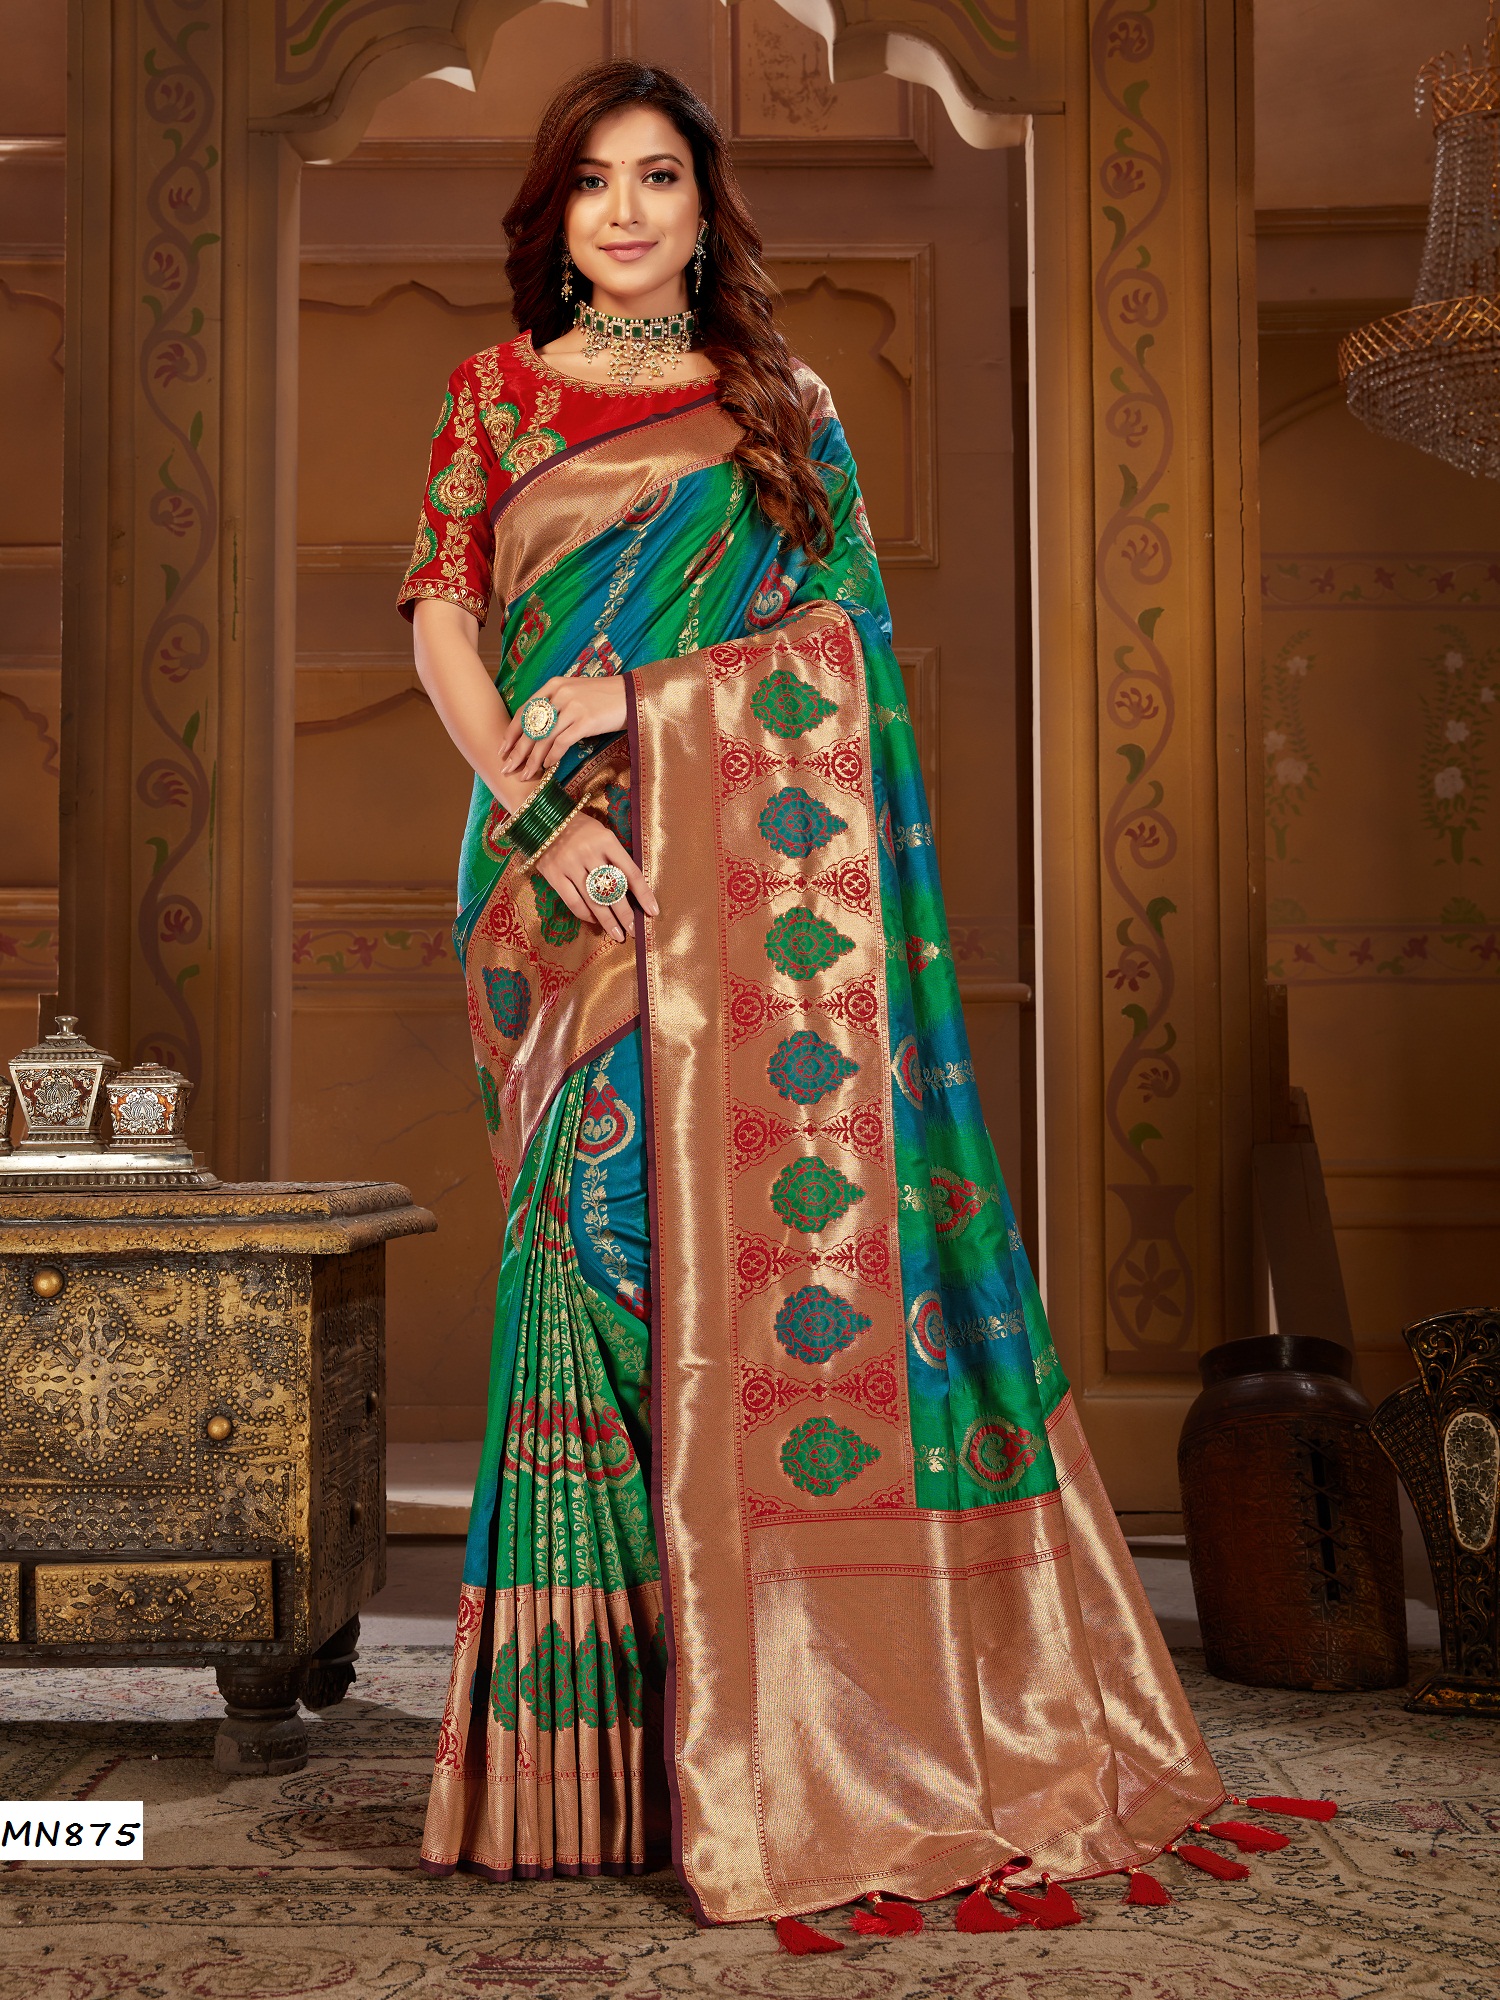 Manohari Roohi Vol 11 Silk Weaving Jacquard Sarees Collectio...